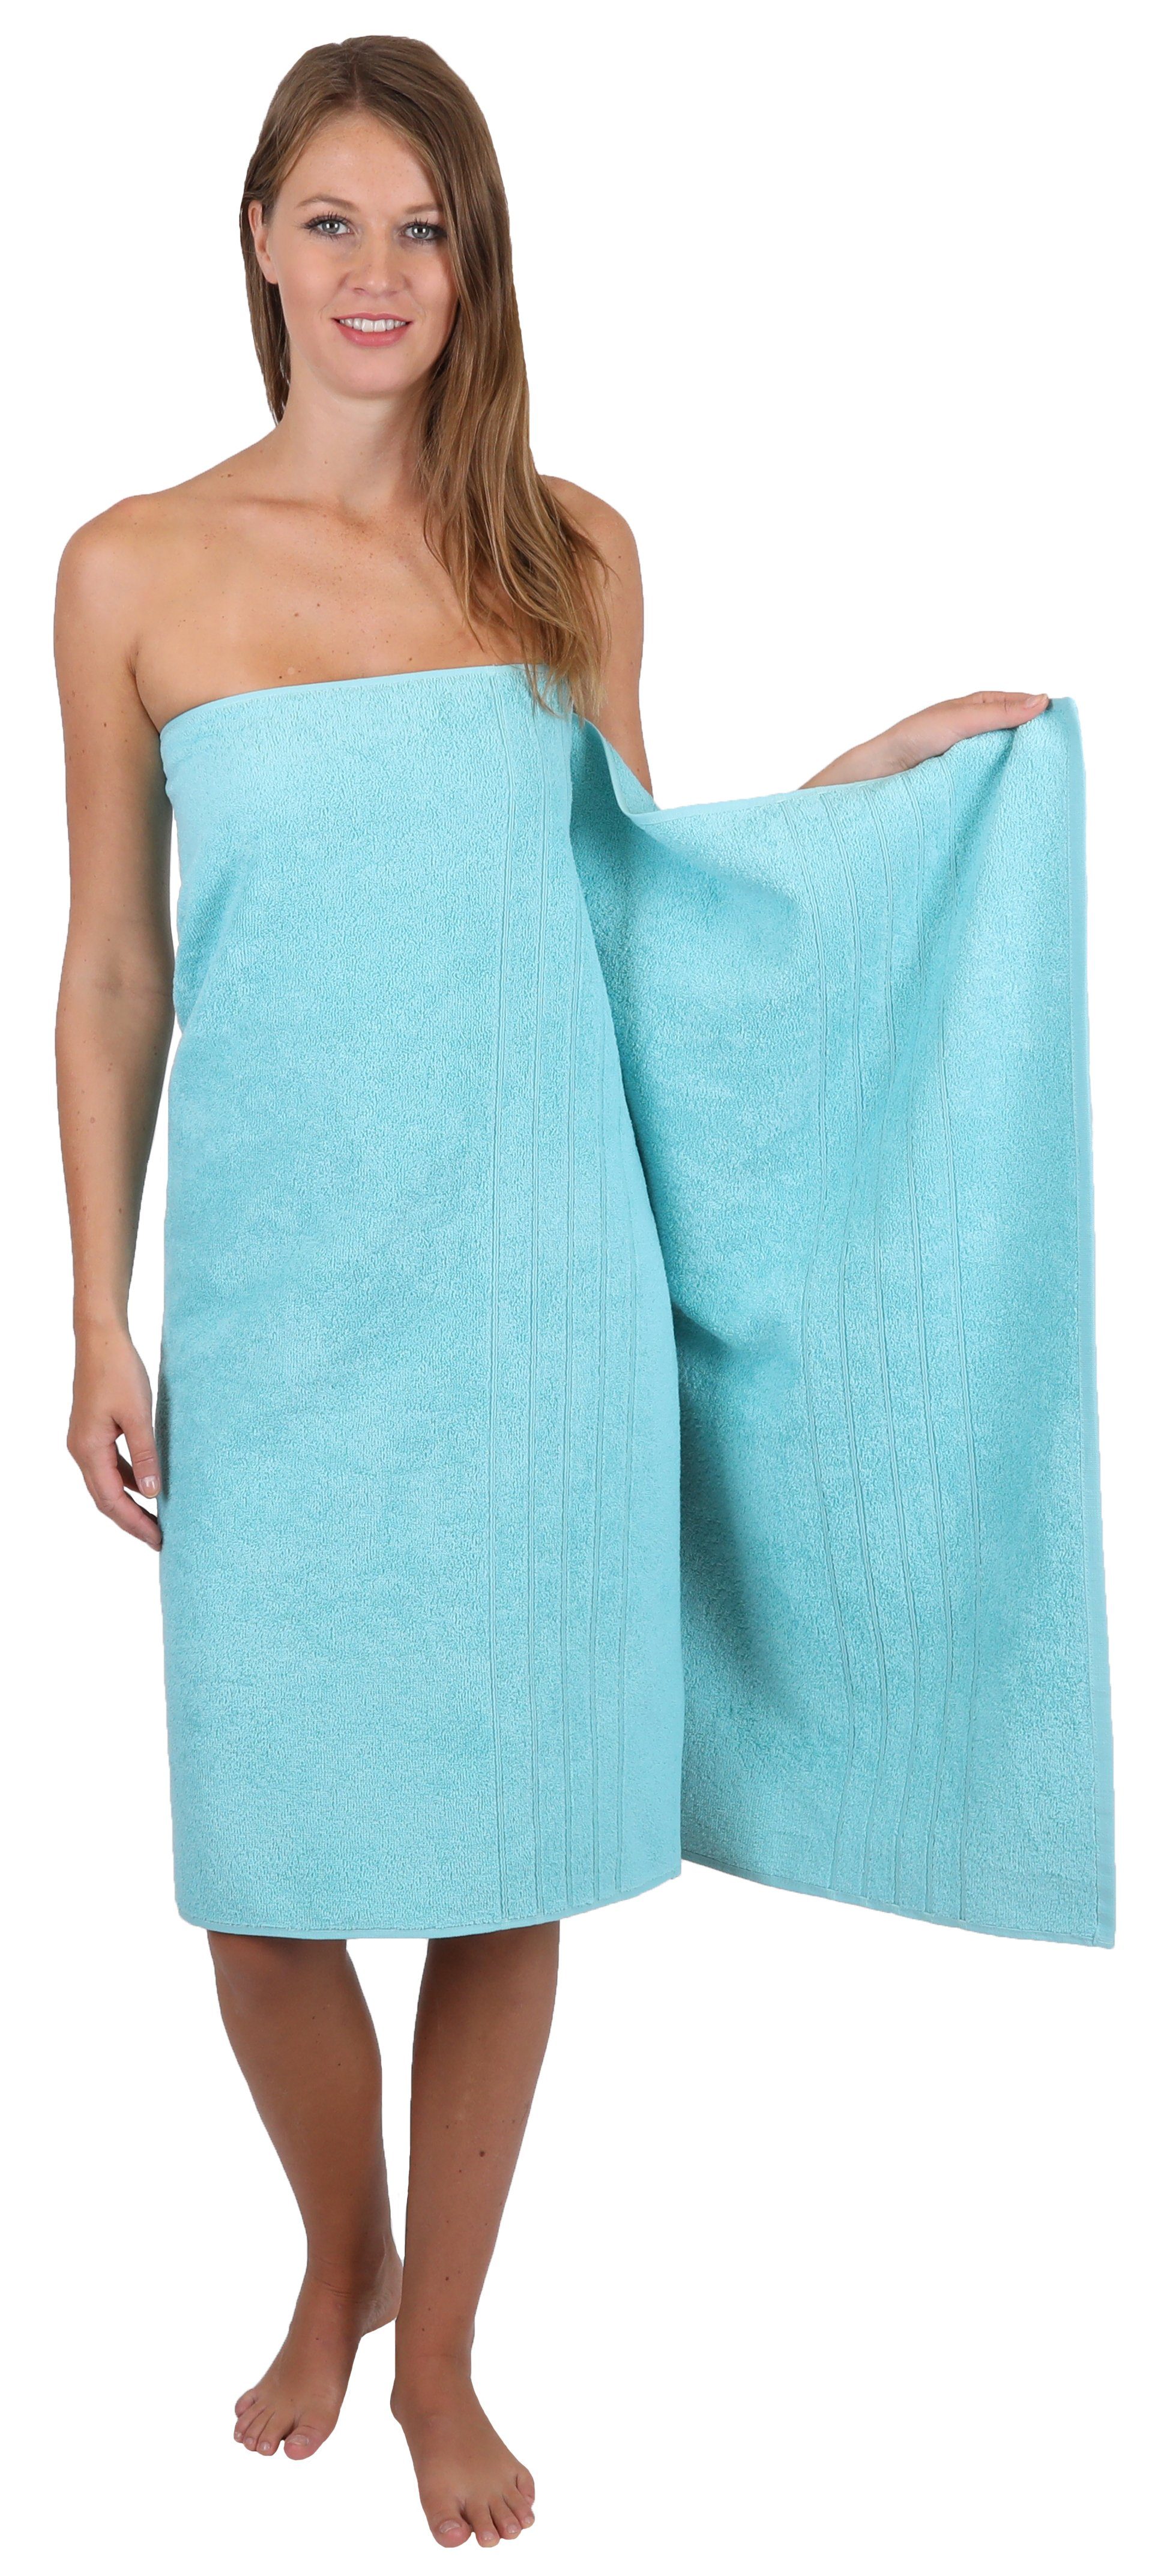 Farbe türkis, Baumwolle, 100% anthrazit Baumwolle Handtuch-Set Set grau Seiftücher Badetücher 2 Betz 2 2 Duschtücher 100% Deluxe Handtücher Handtuch 8-TLG. und (8-tlg) 2